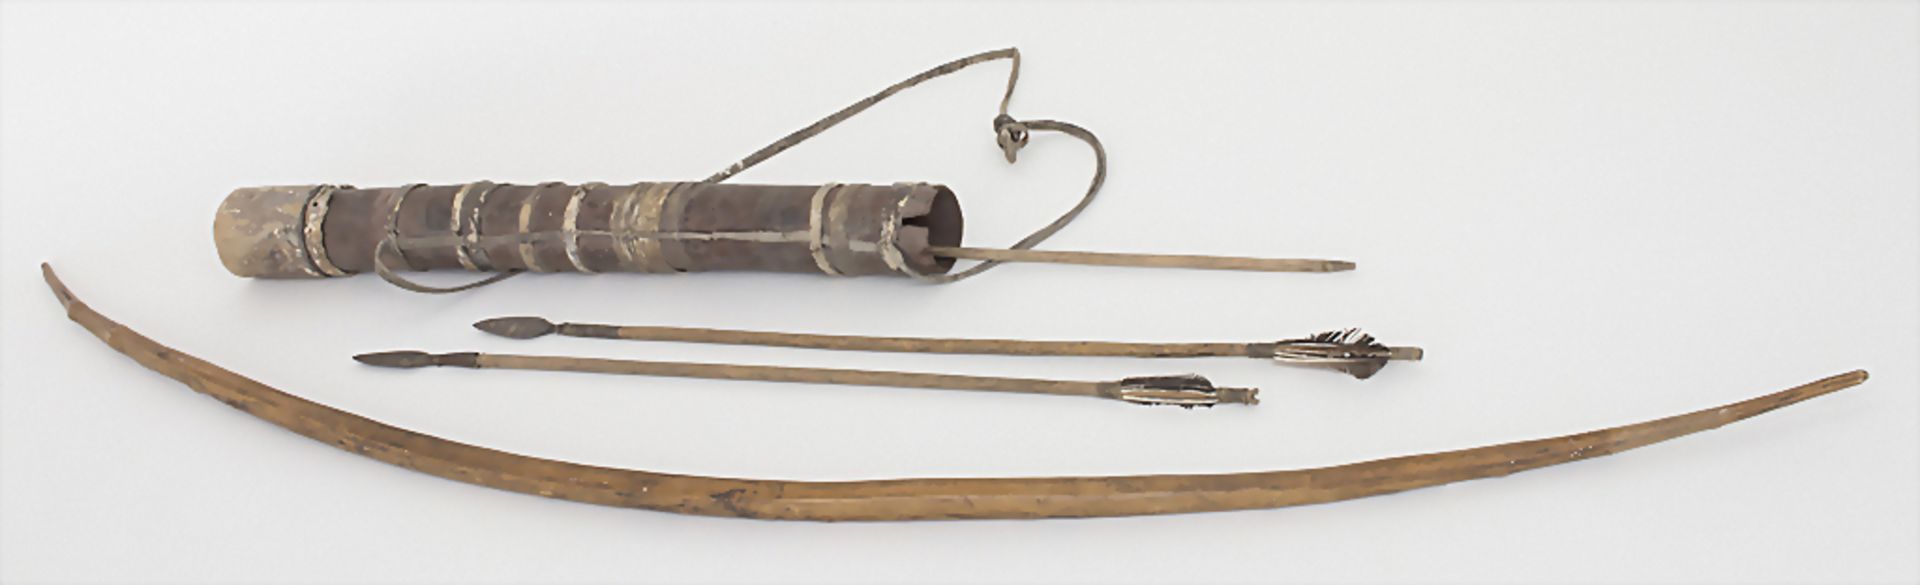 Bogen mit 3 Pfeilen im Köcher / A bow and 3 arrows in quiverMaterial: Holz, Metall, L